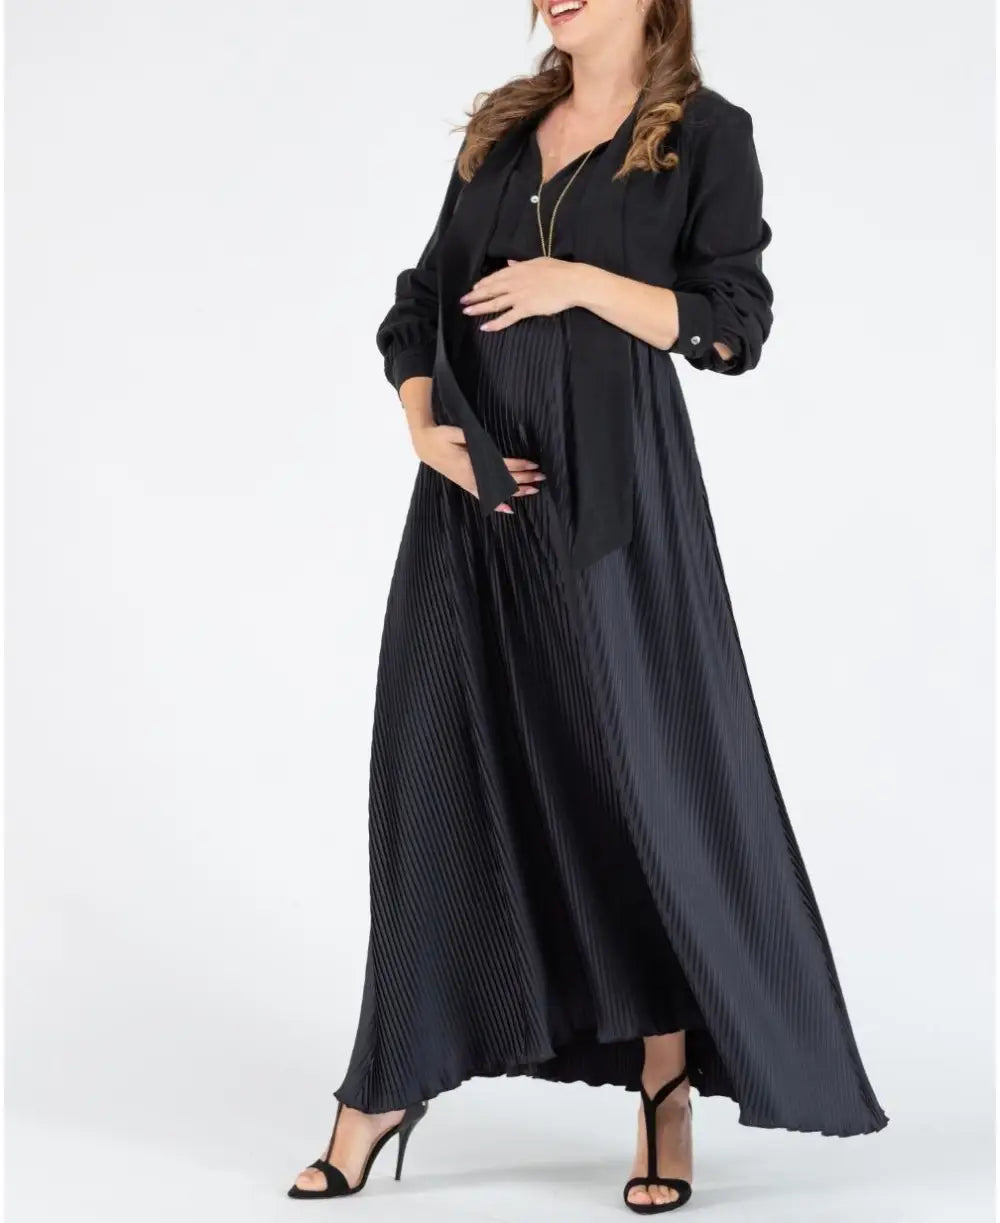 Long pleated pregnancy skirt Bardot black